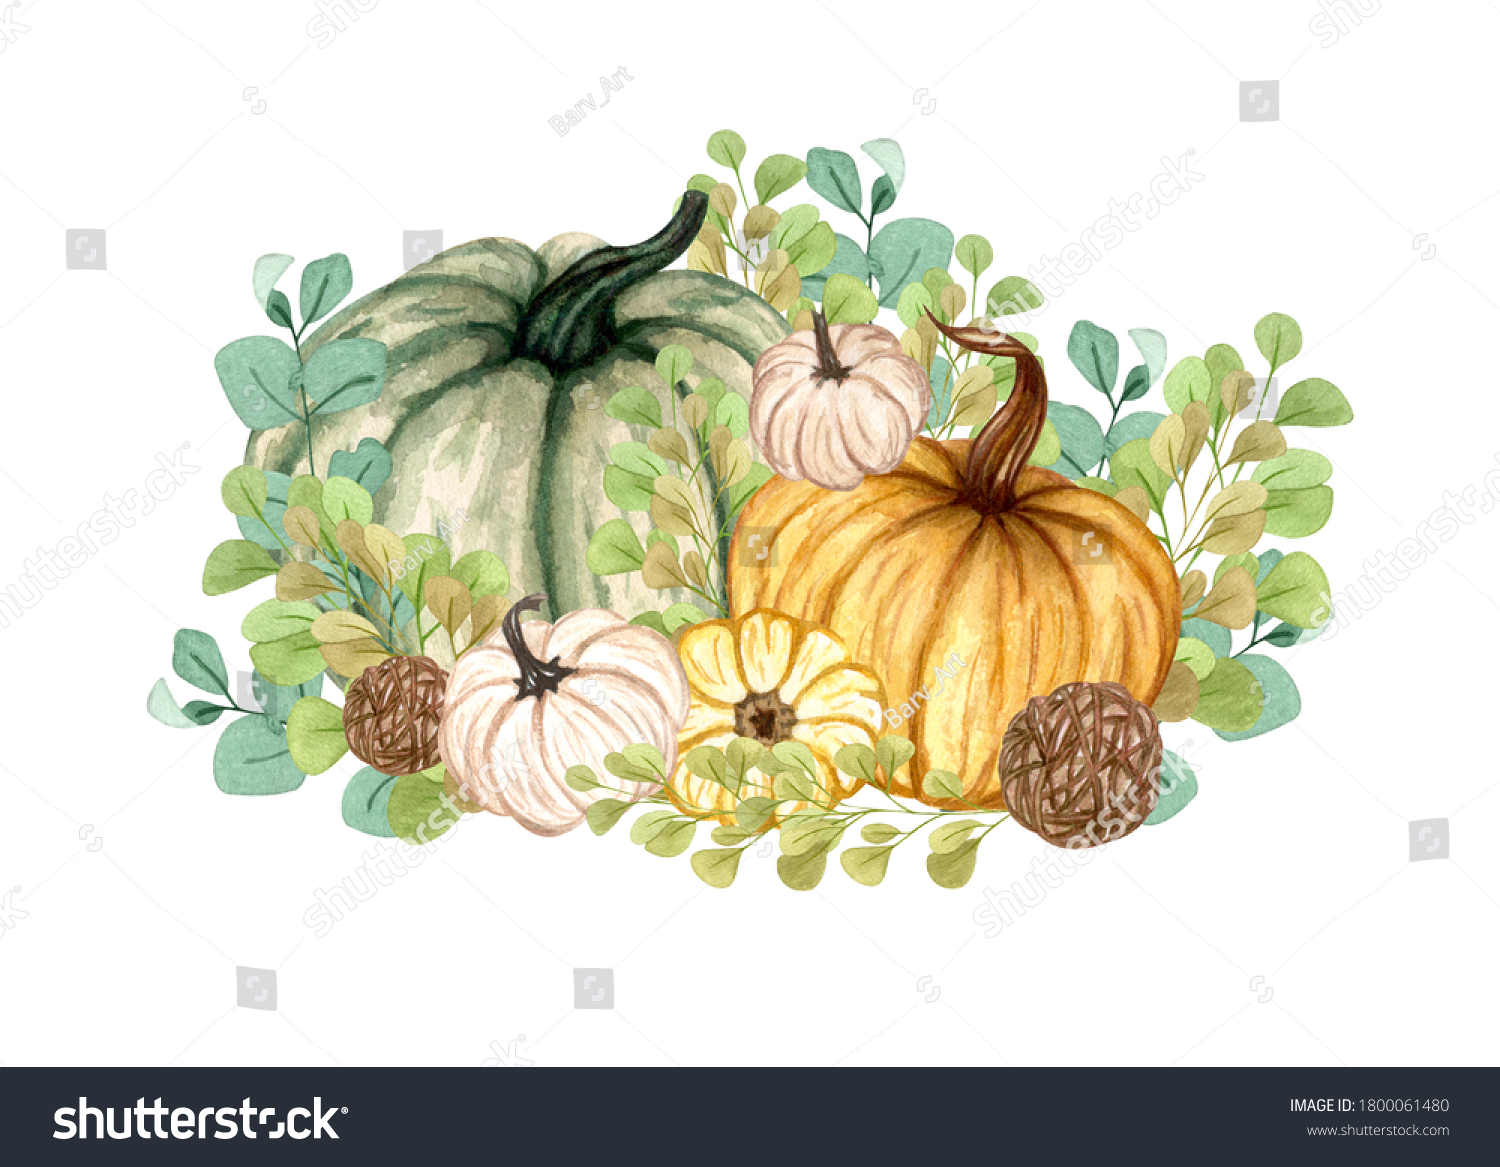 Download Watercolor Pumpkin Composition Floral Pumpkins Halloween Stock Illustration 1800061480